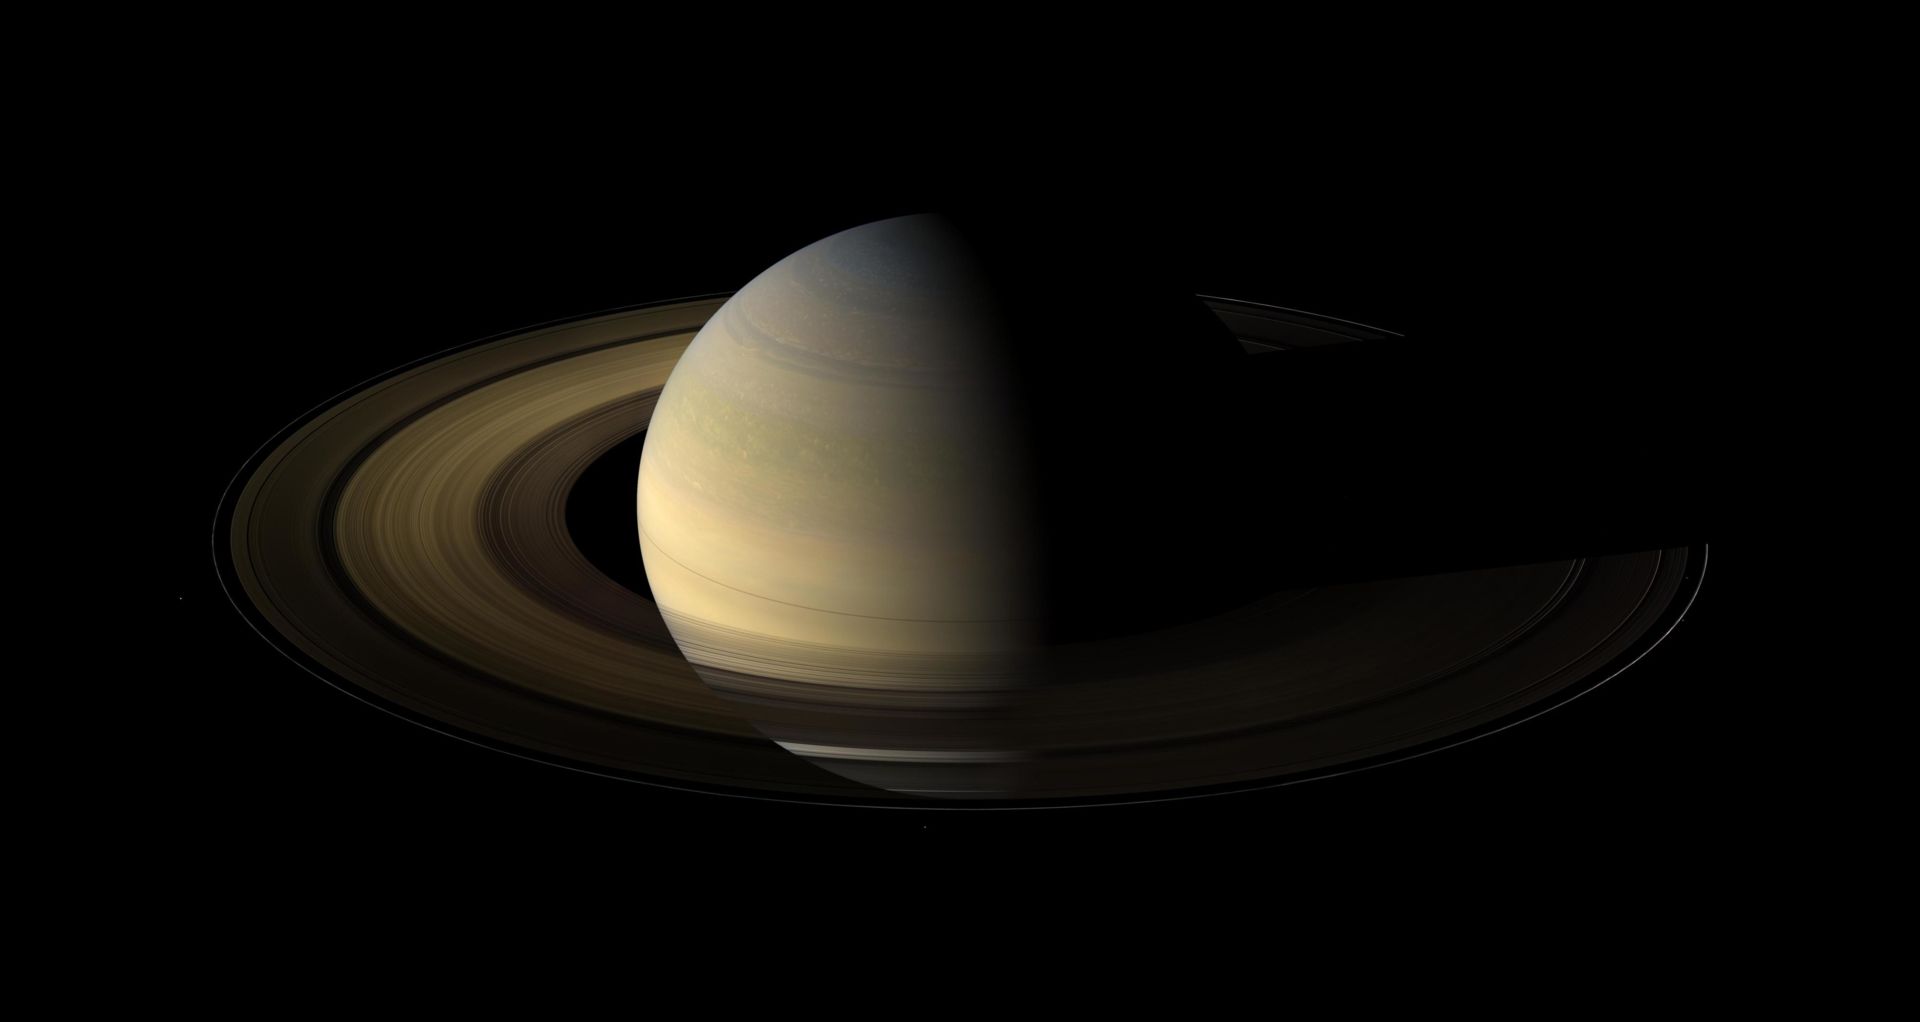 Saturne - credit NASA JPL Space Science Institute